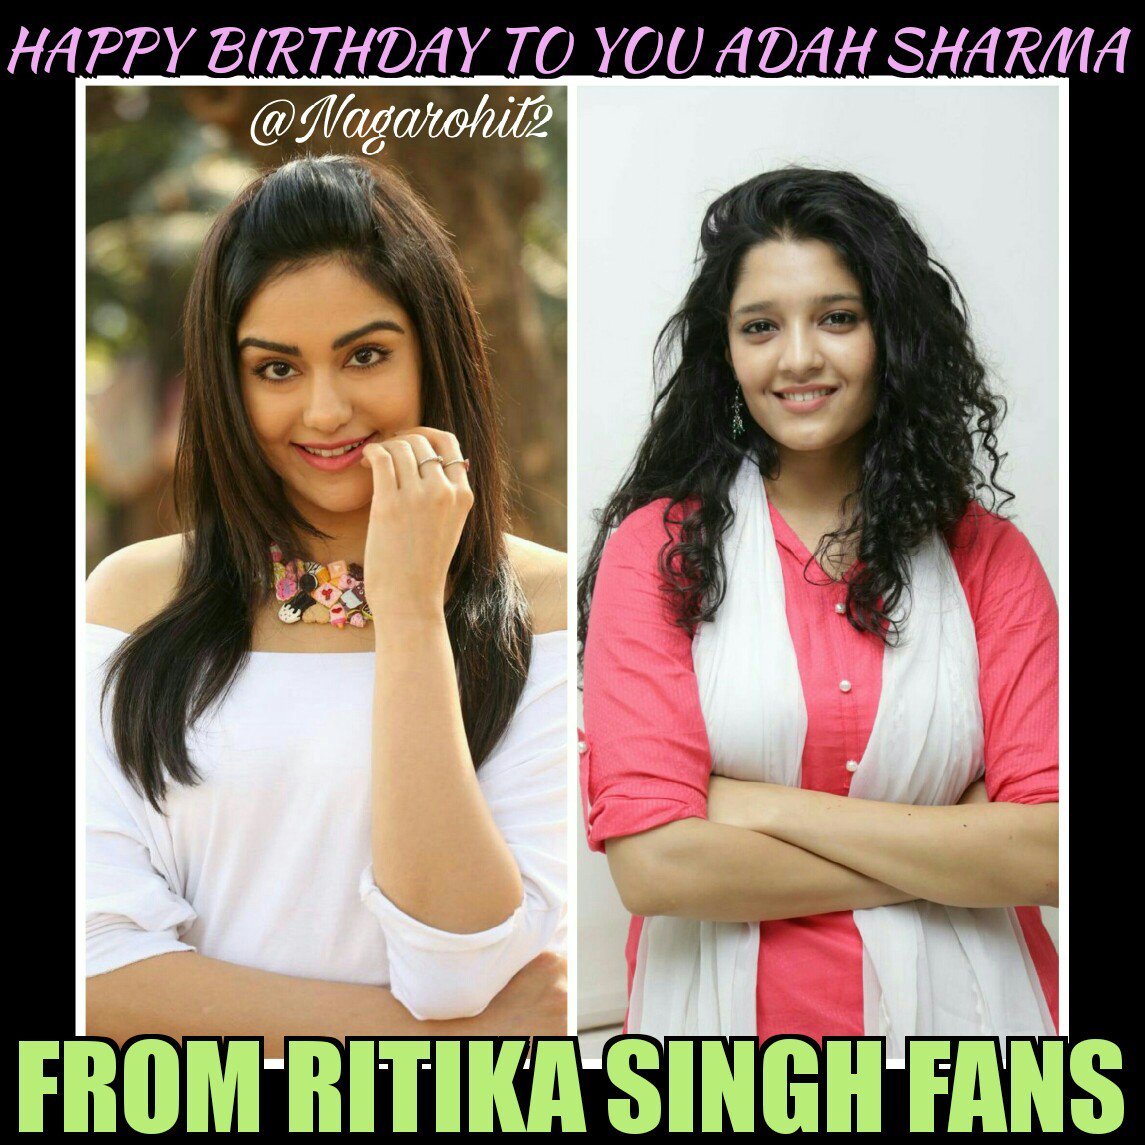 Wishing You Very #HappyBirthday To You #AdahSharma @adah_sharma From #RitikaSingh @ritika_offl Fans 😊❤️
#HappyBirthdayAdahSharma 🎂🎁🎉🎈